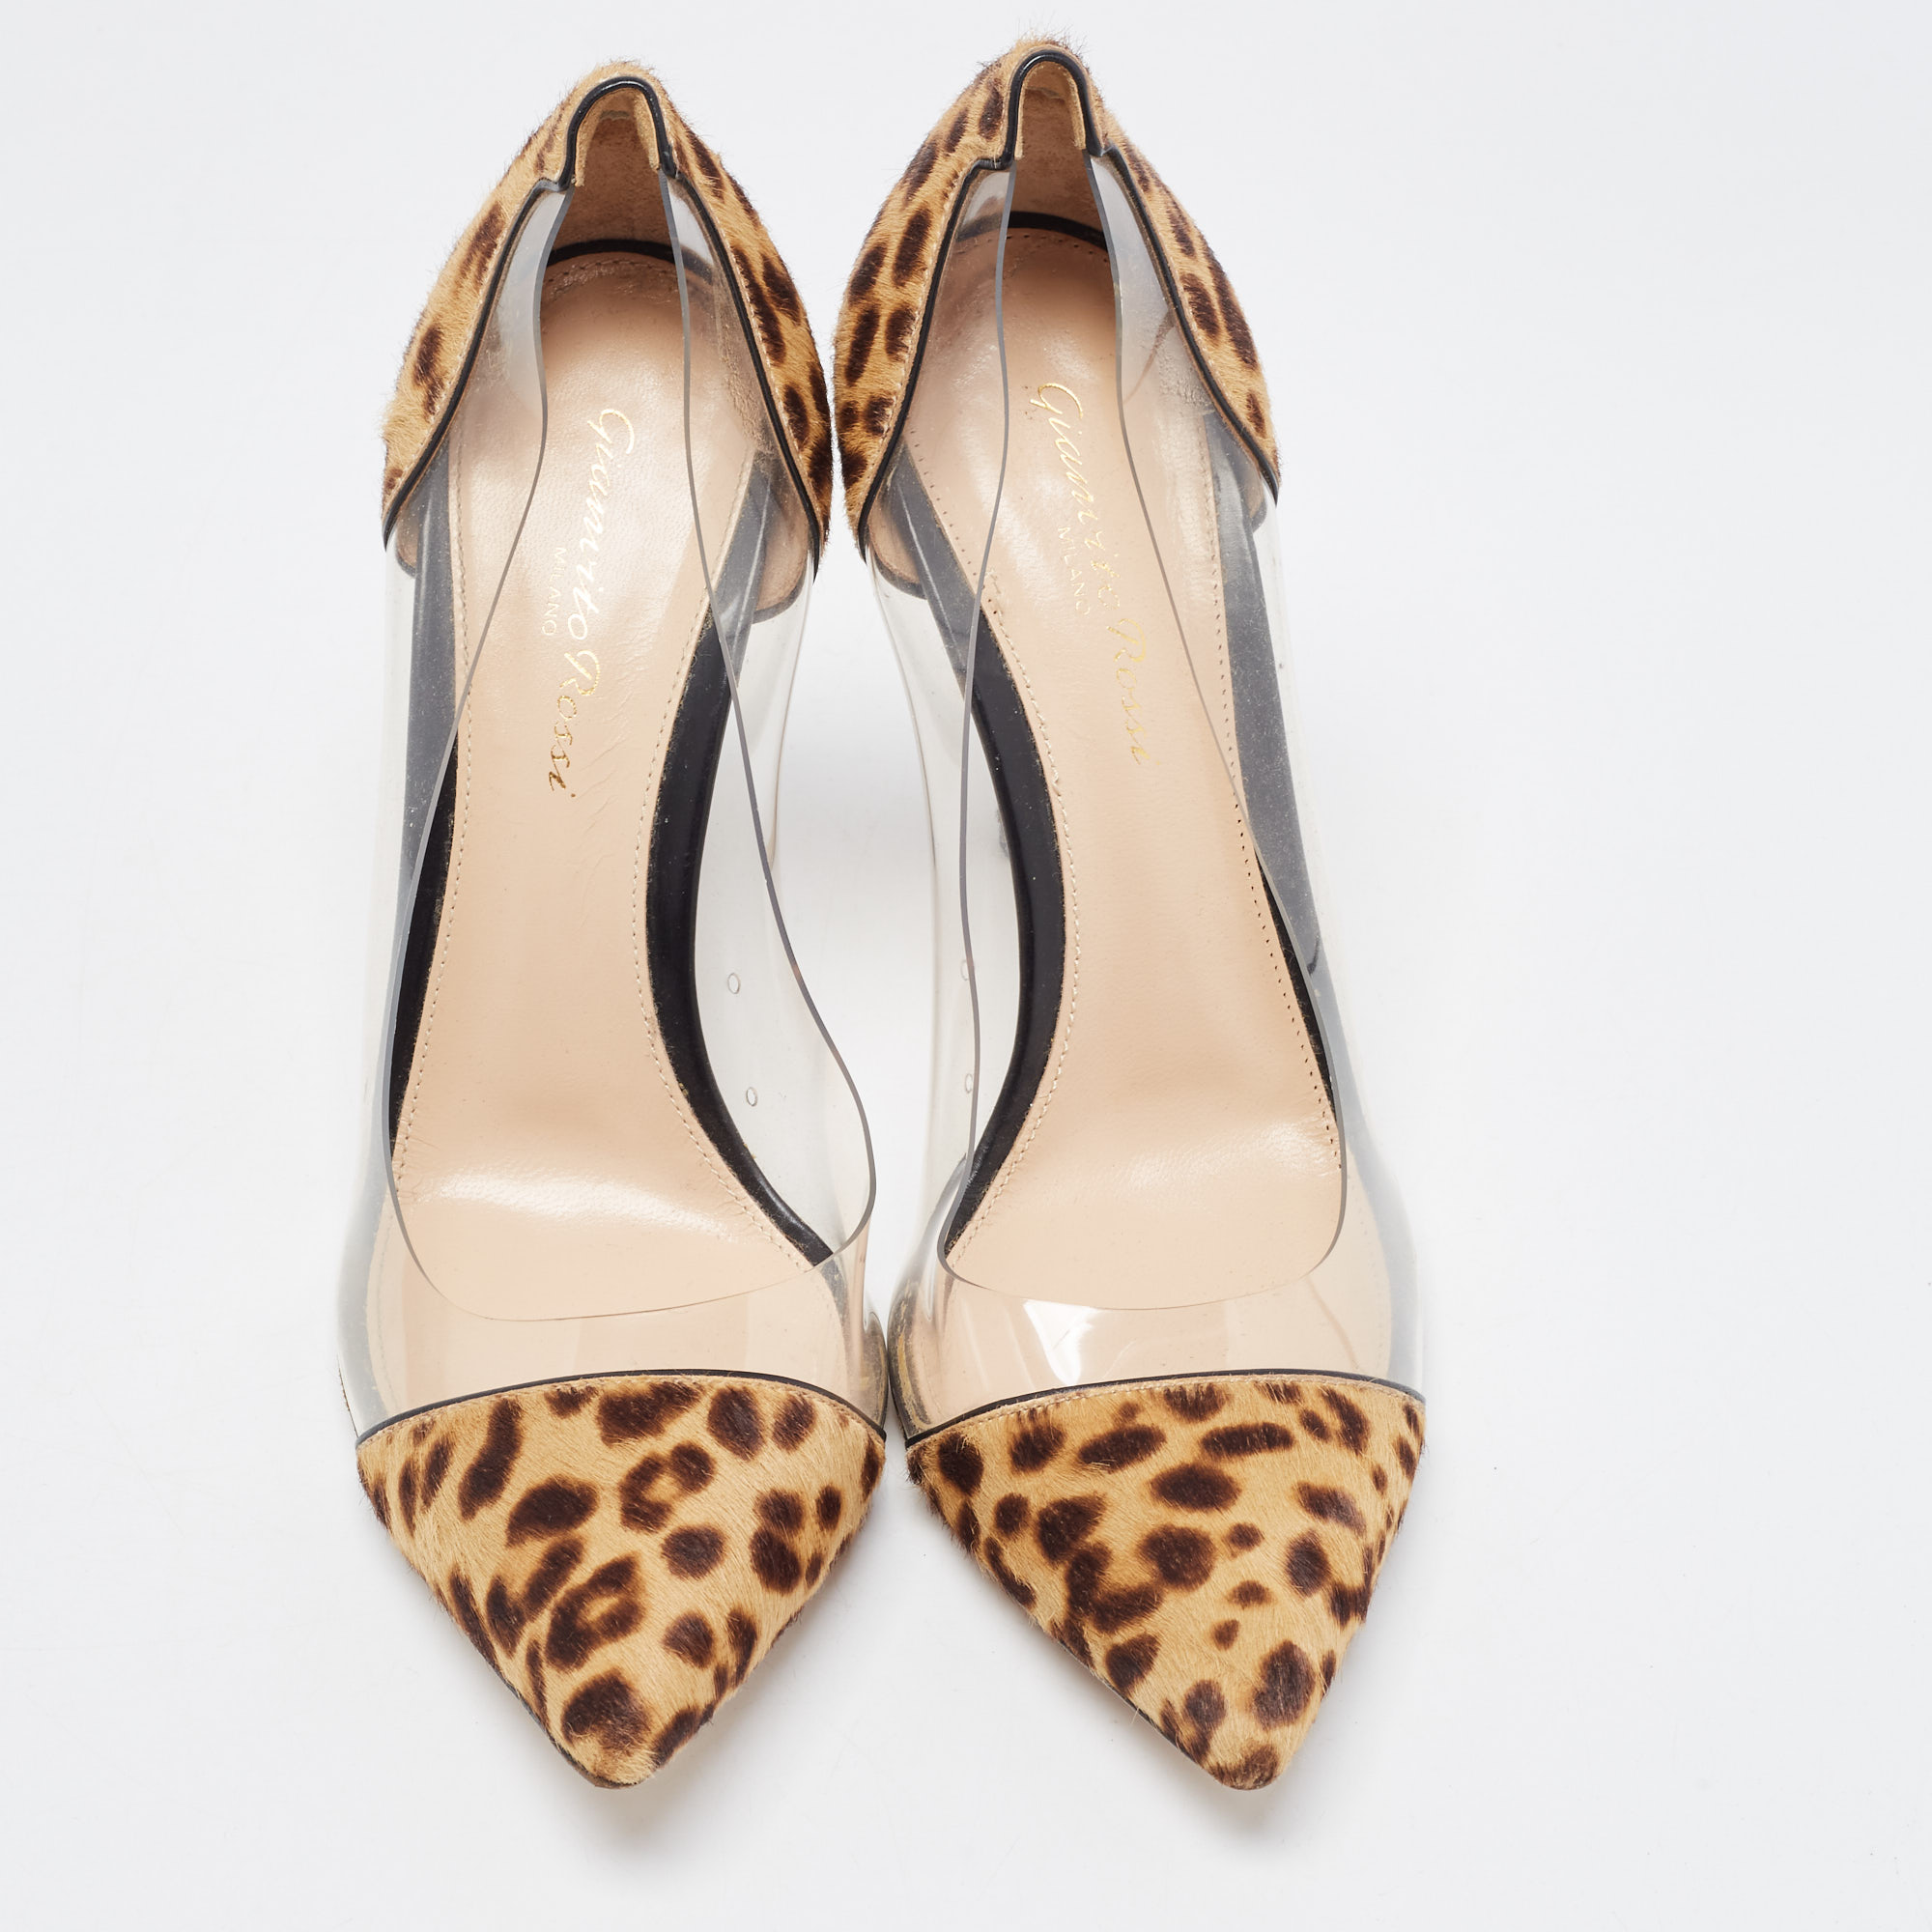 Gianvito Rossi Brown/Beige Leopard Print Calf Hair Plexi Pumps Size 37.5